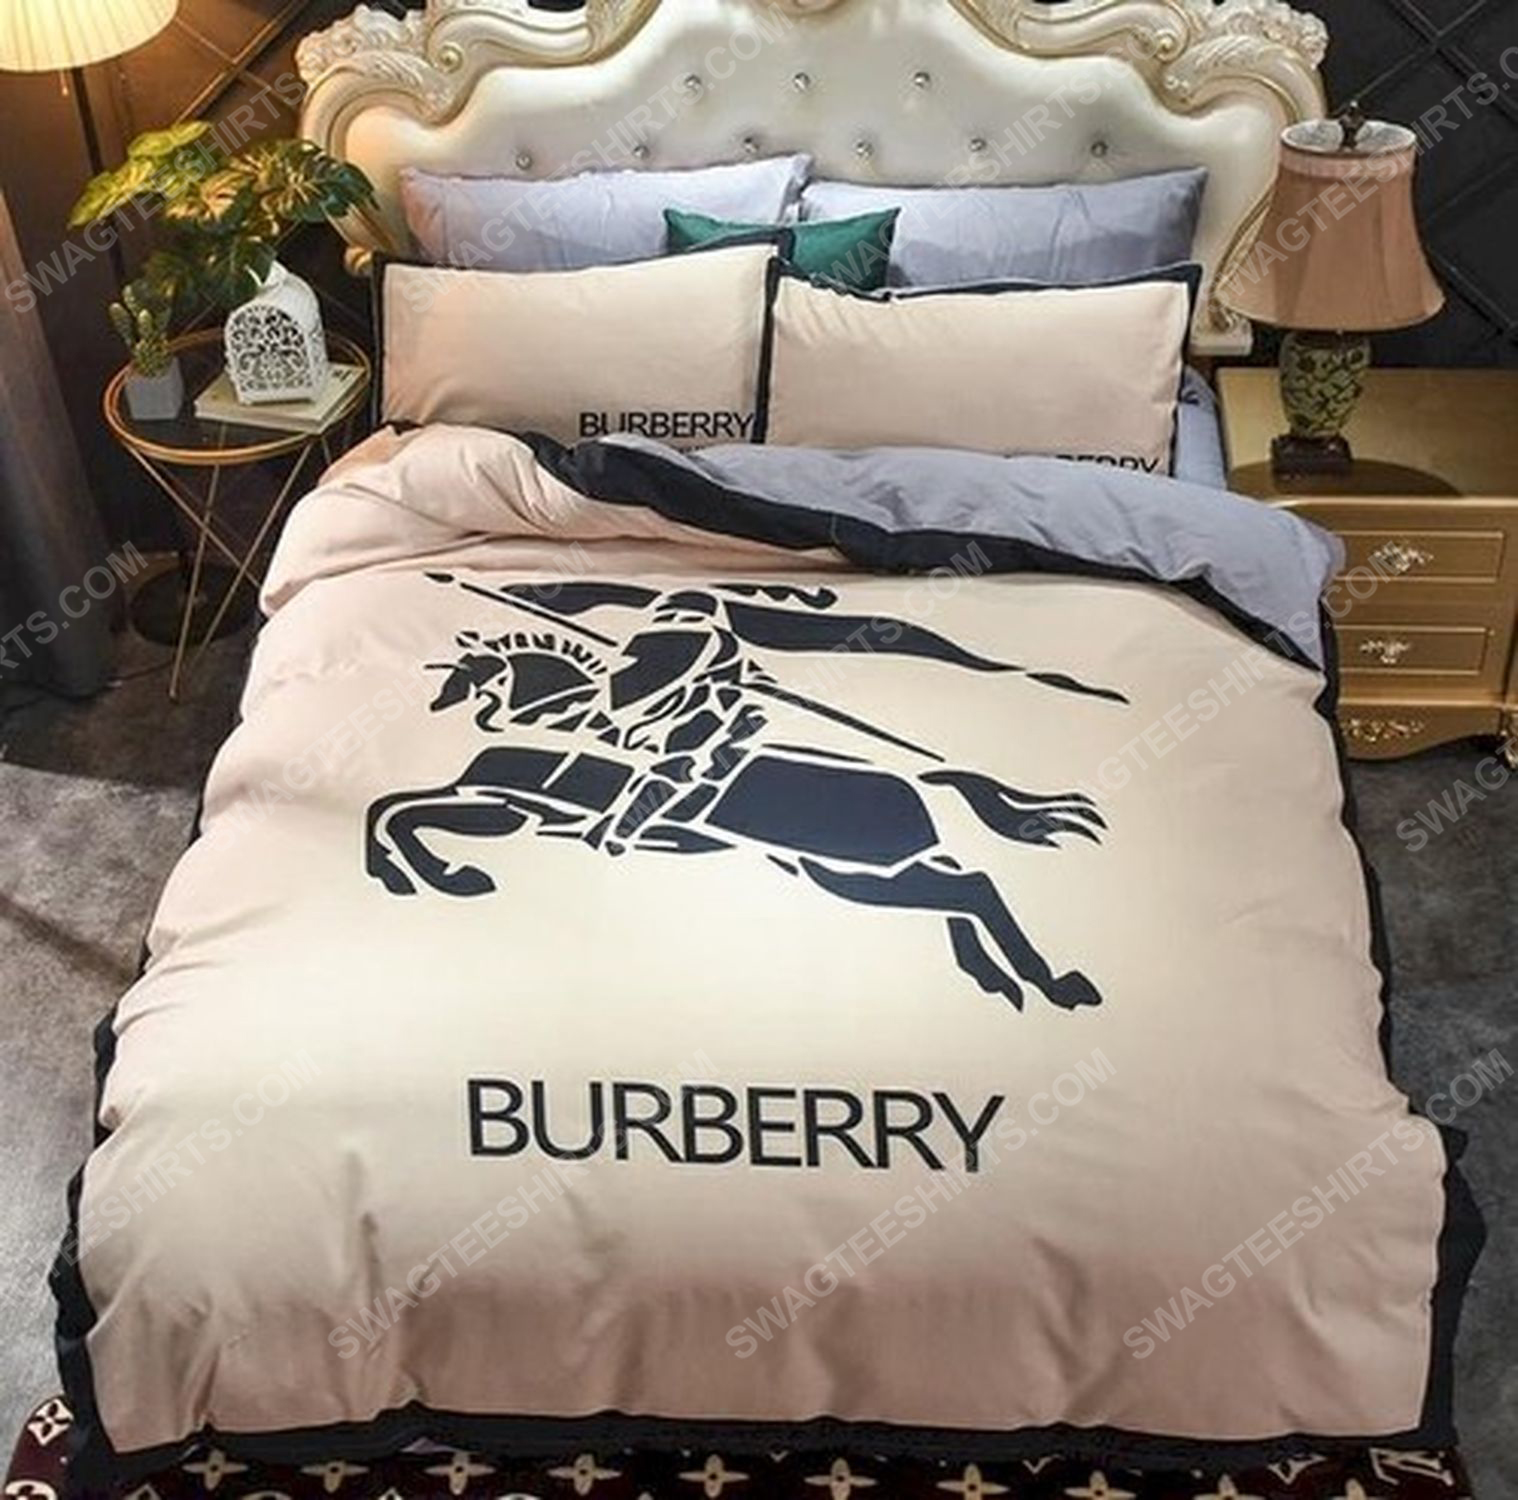 [special edition] Burberry symbol full print duvet cover bedding set – maria